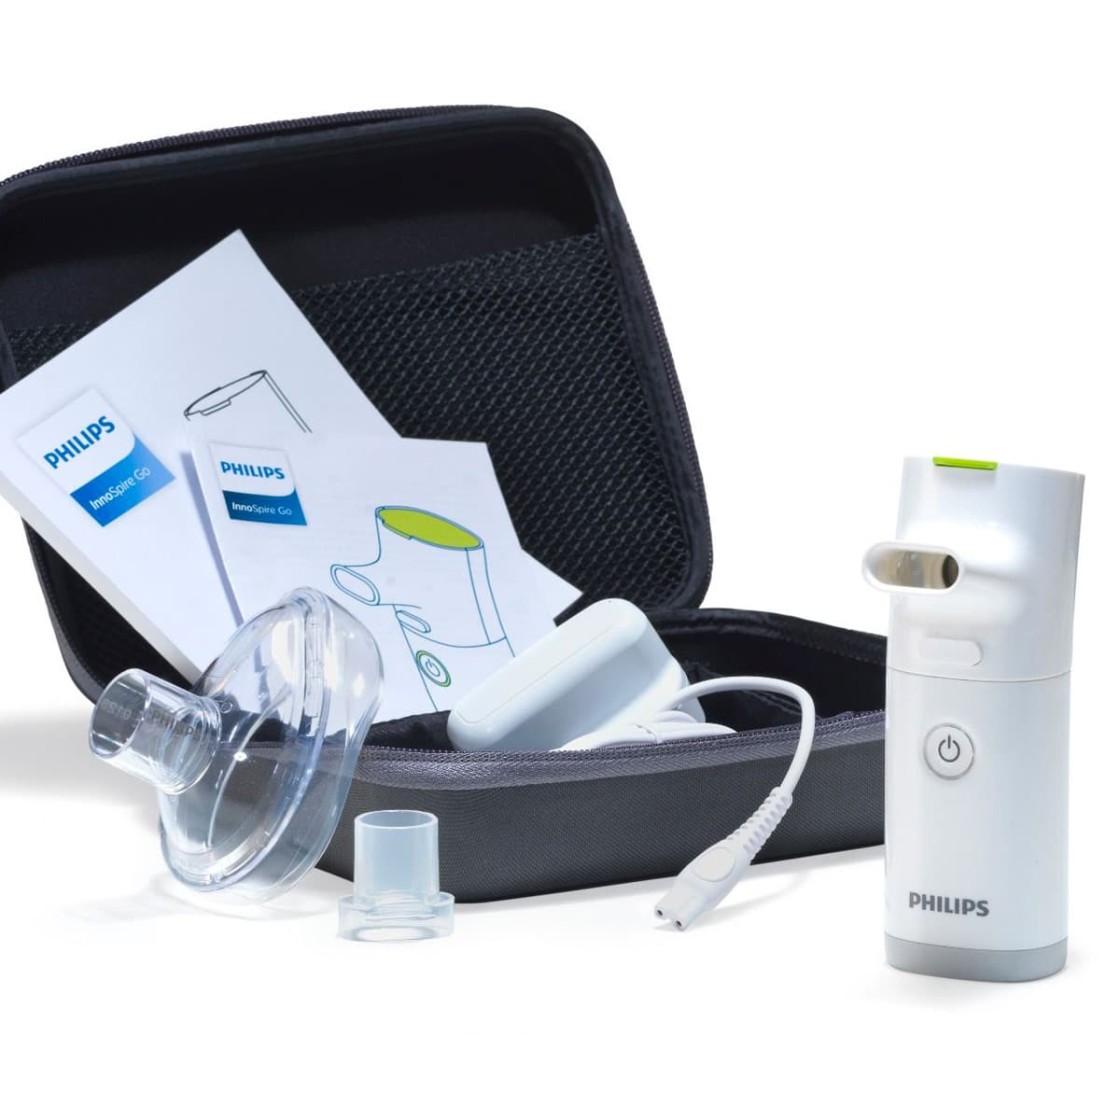 Philips InnoSpire Go Portable Mesh Nebulizer Kit